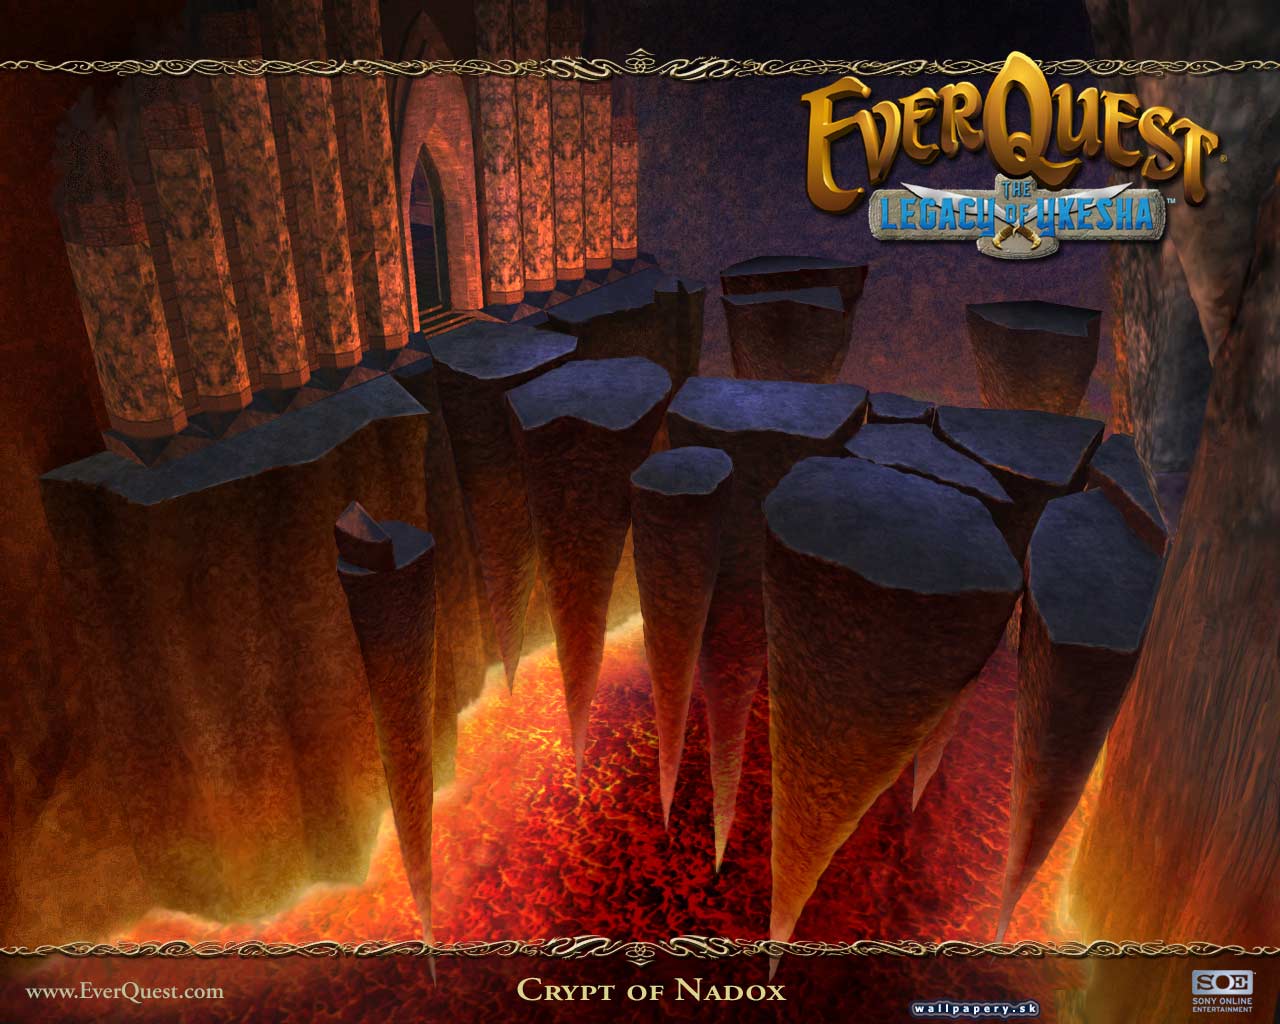 EverQuest: The Legacy of Ykesha - wallpaper 4